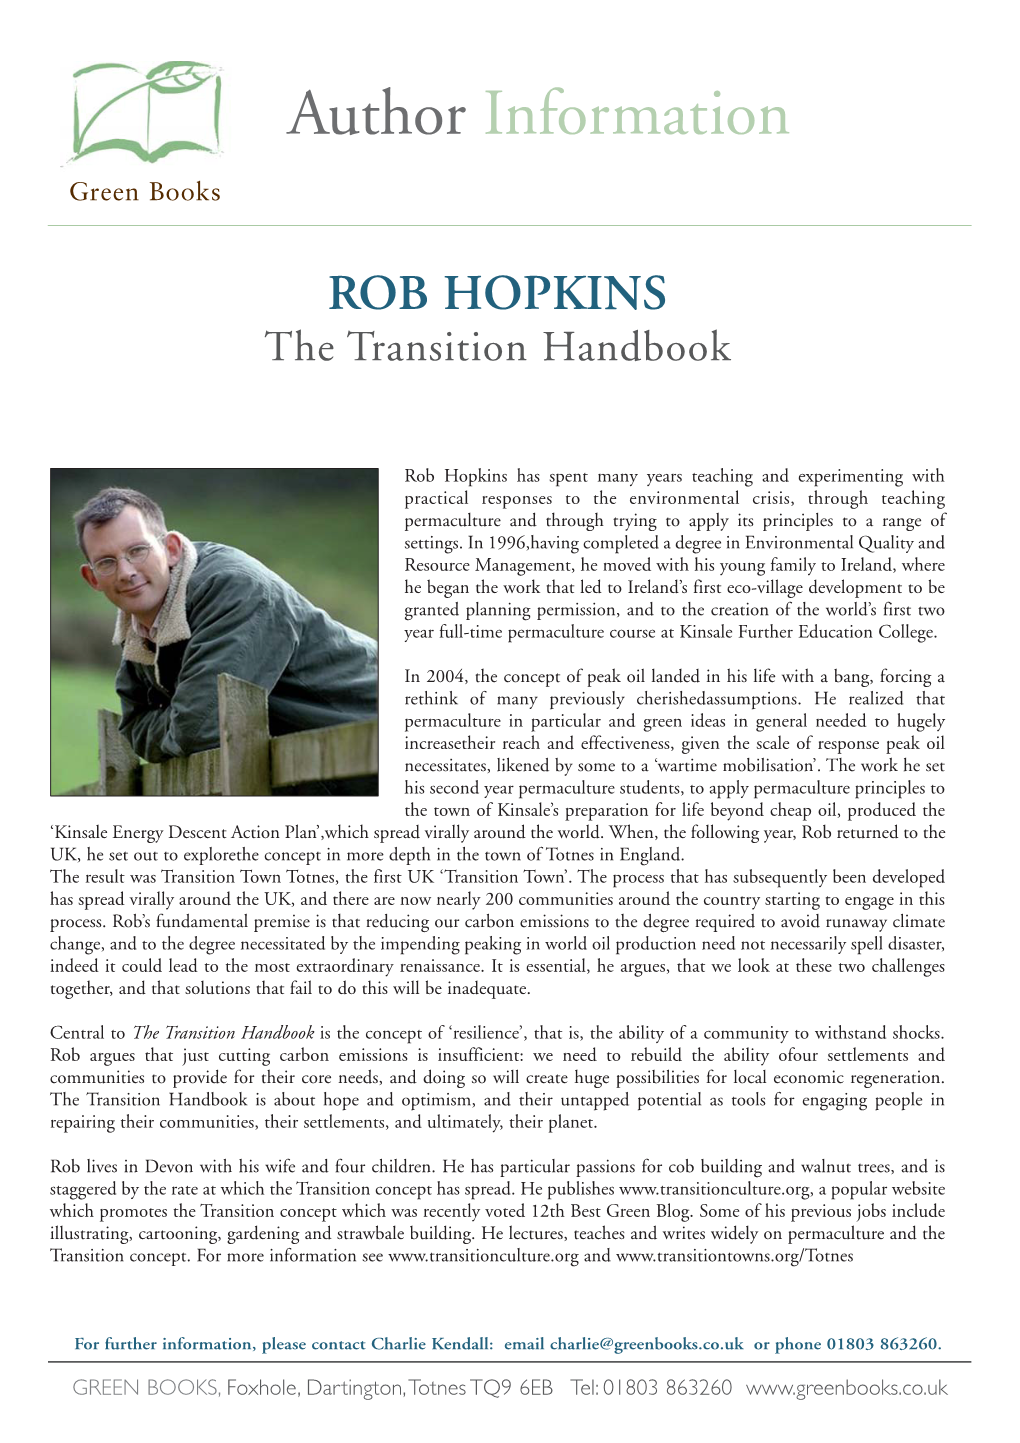 ROB HOPKINS the Transition Handbook